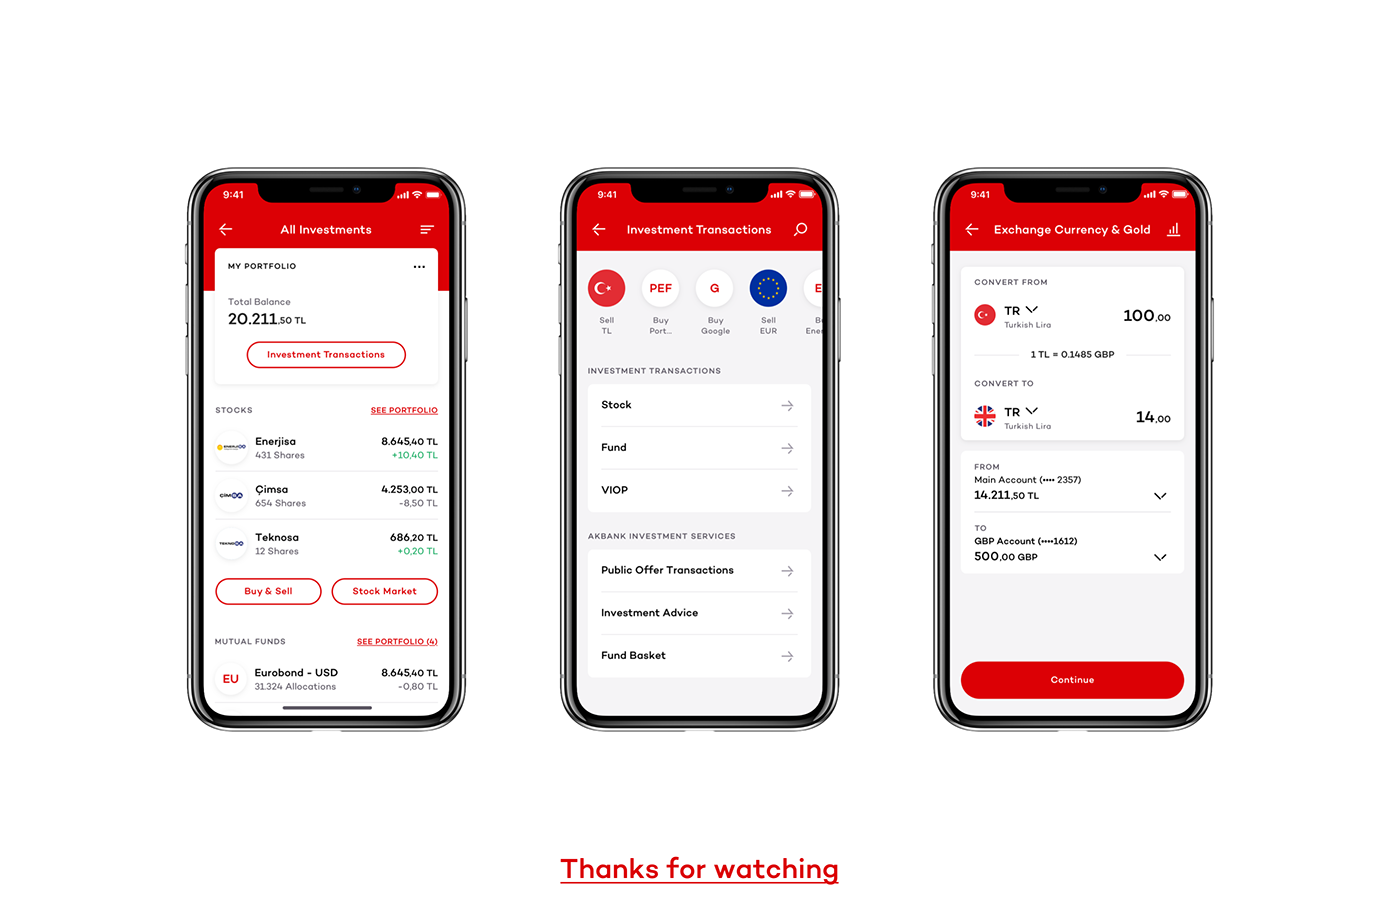 app banking everyday banking  ILLUSTRATION  mobile UI ux wealth